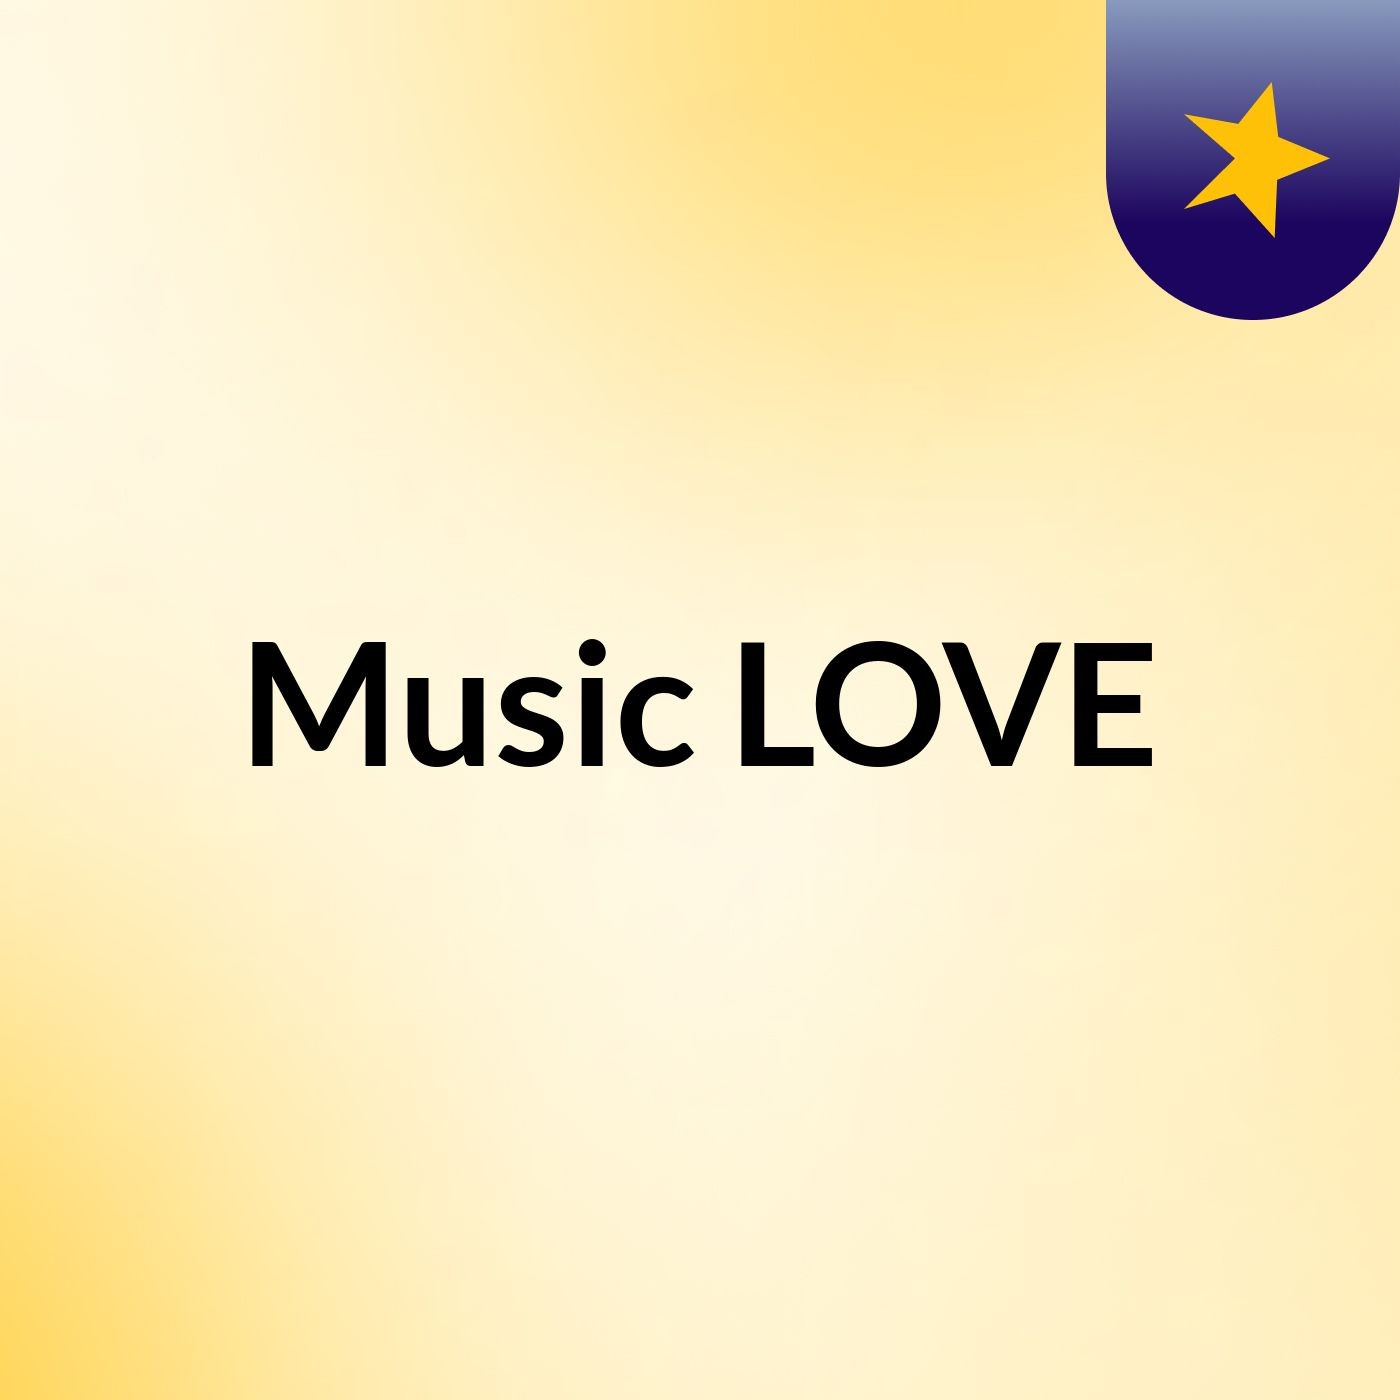 Music LOVE